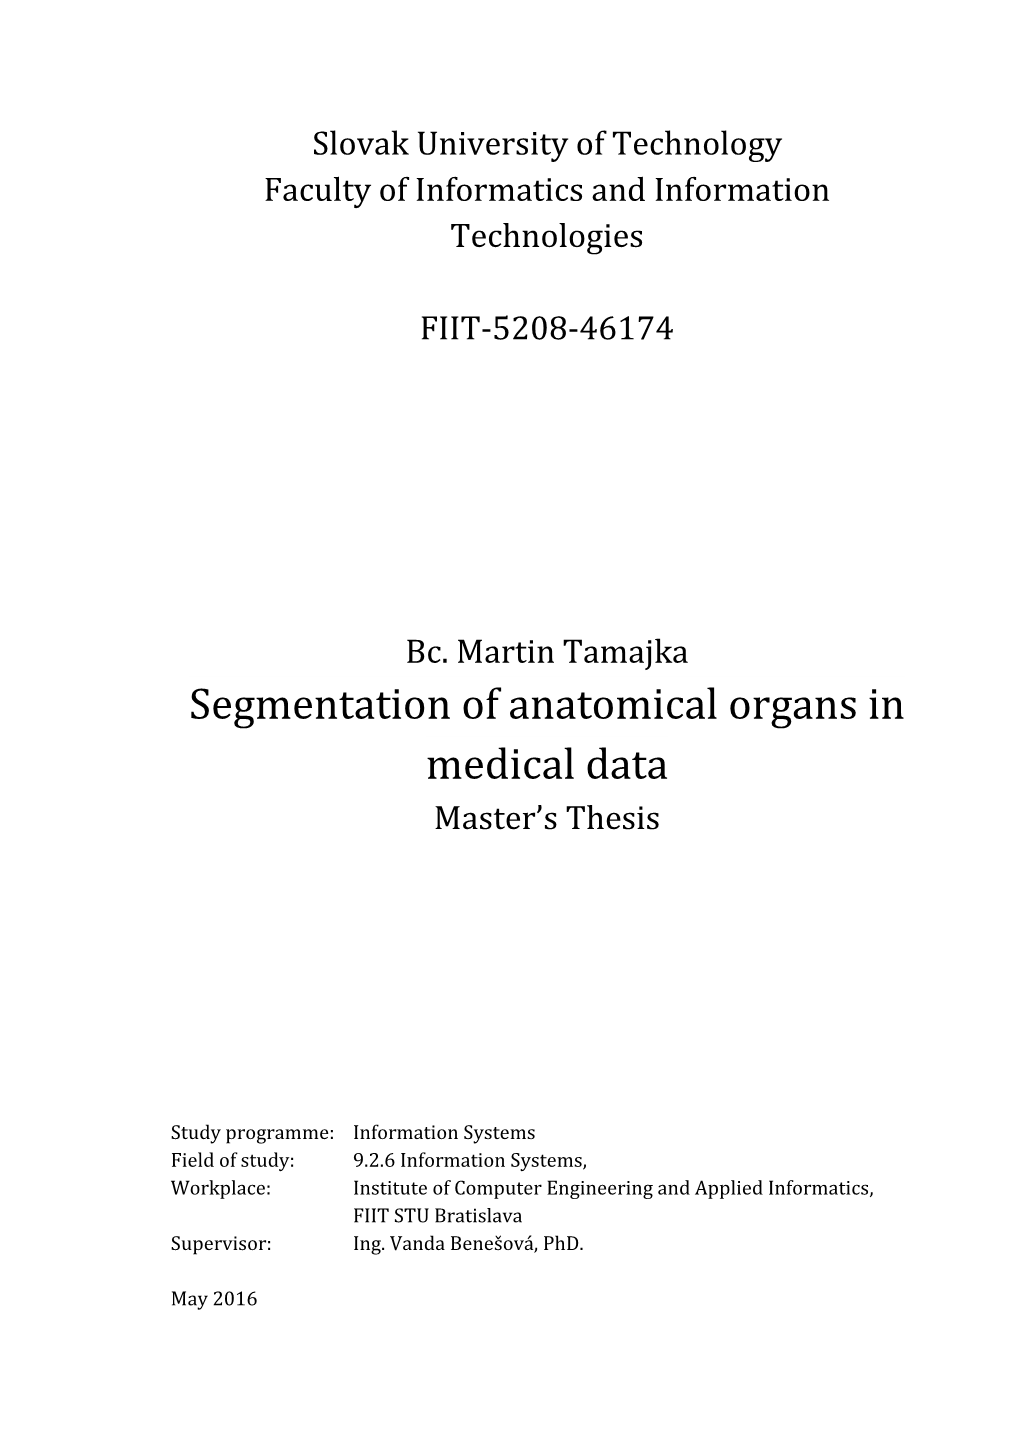 Segmentation of Anatomical Organs in Medical Data Master’S Thesis